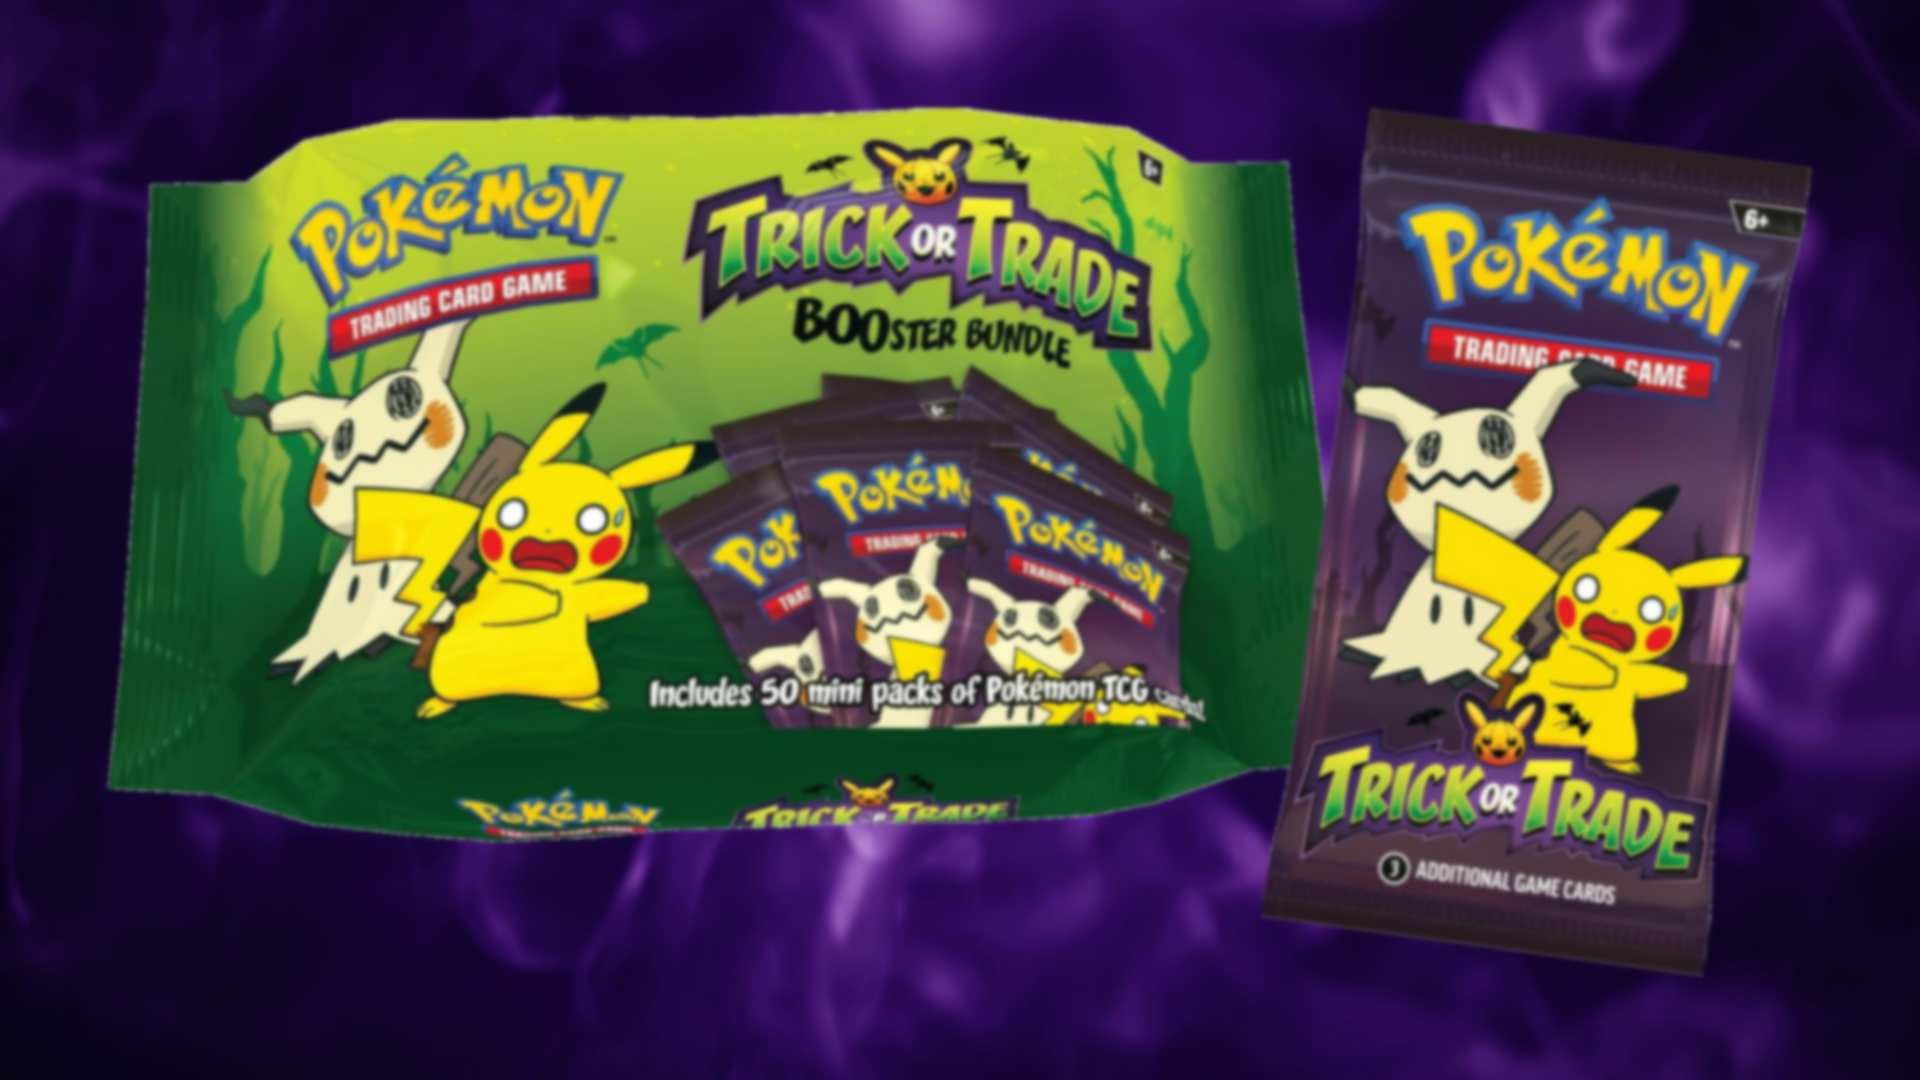 Pokémon TCG: Trick or Trade Booster Bundle